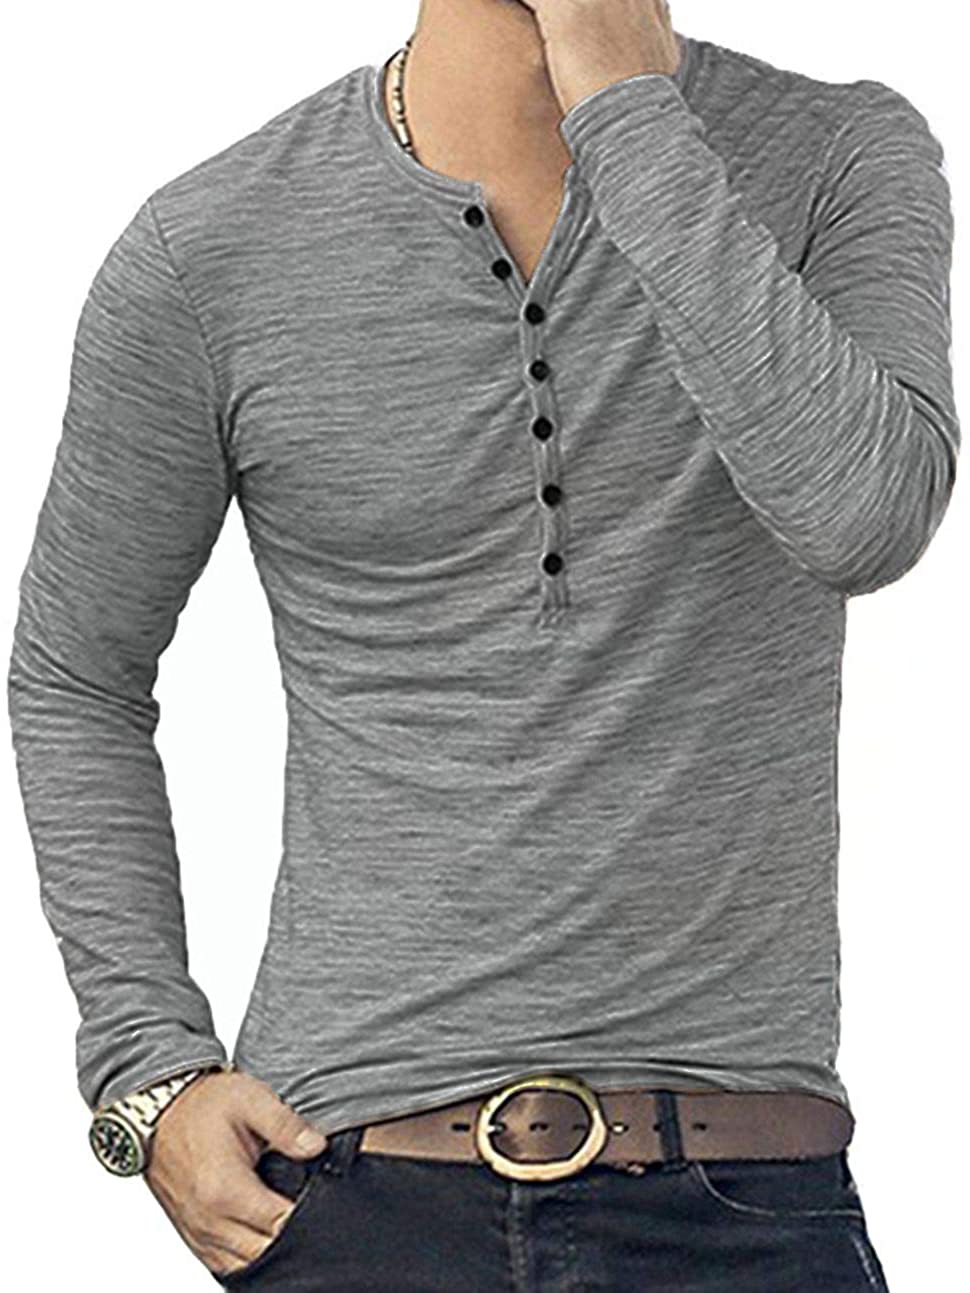 KUYIGO Mens Casual Slim Fit Basic Henley Long/Short Sleeve T-Shirt